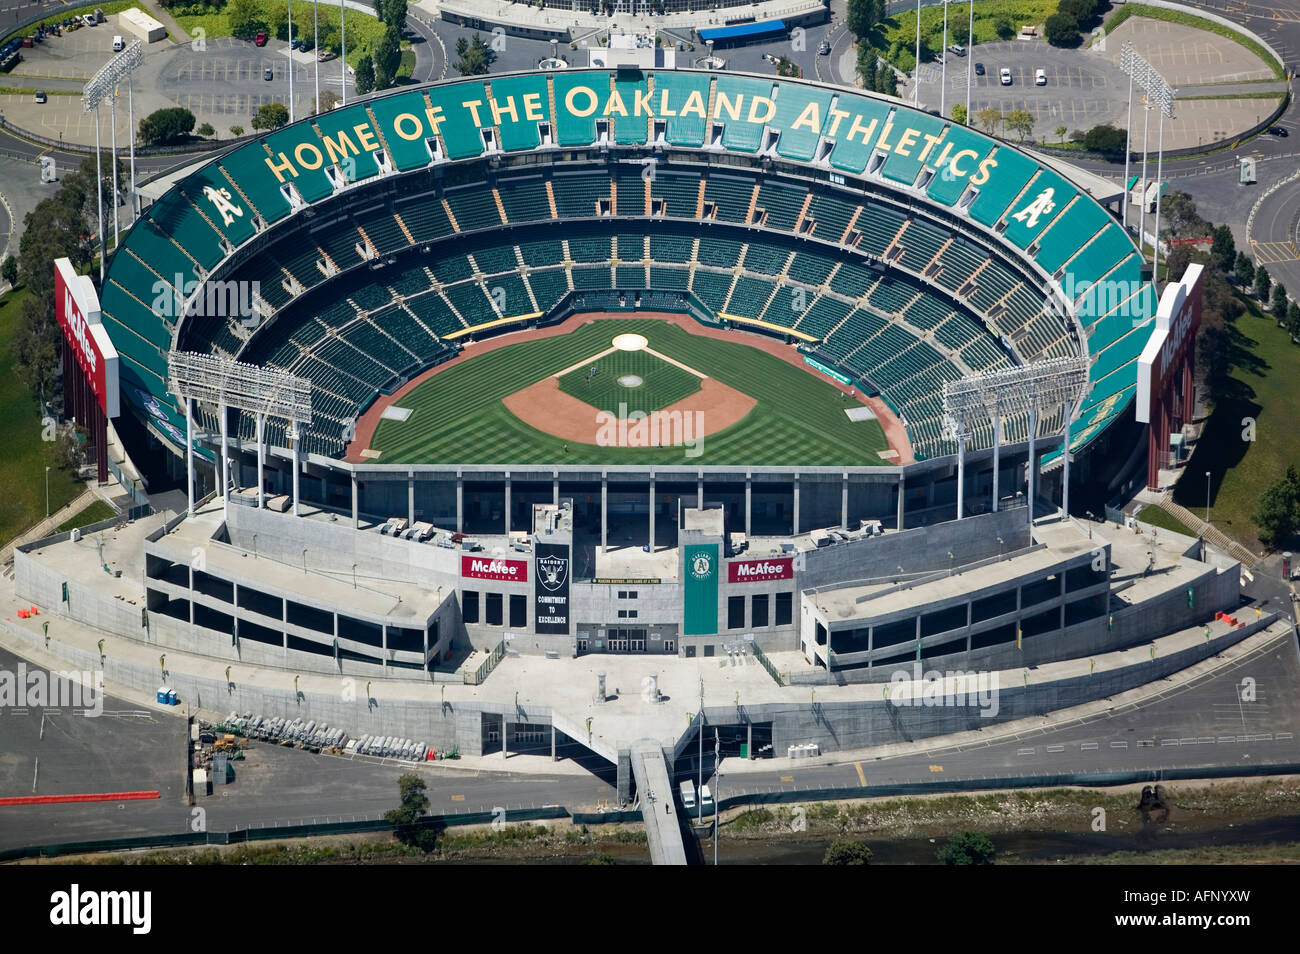 Oakland Athletics Image - Oakland Athletics Picture, Graphic, & Photo